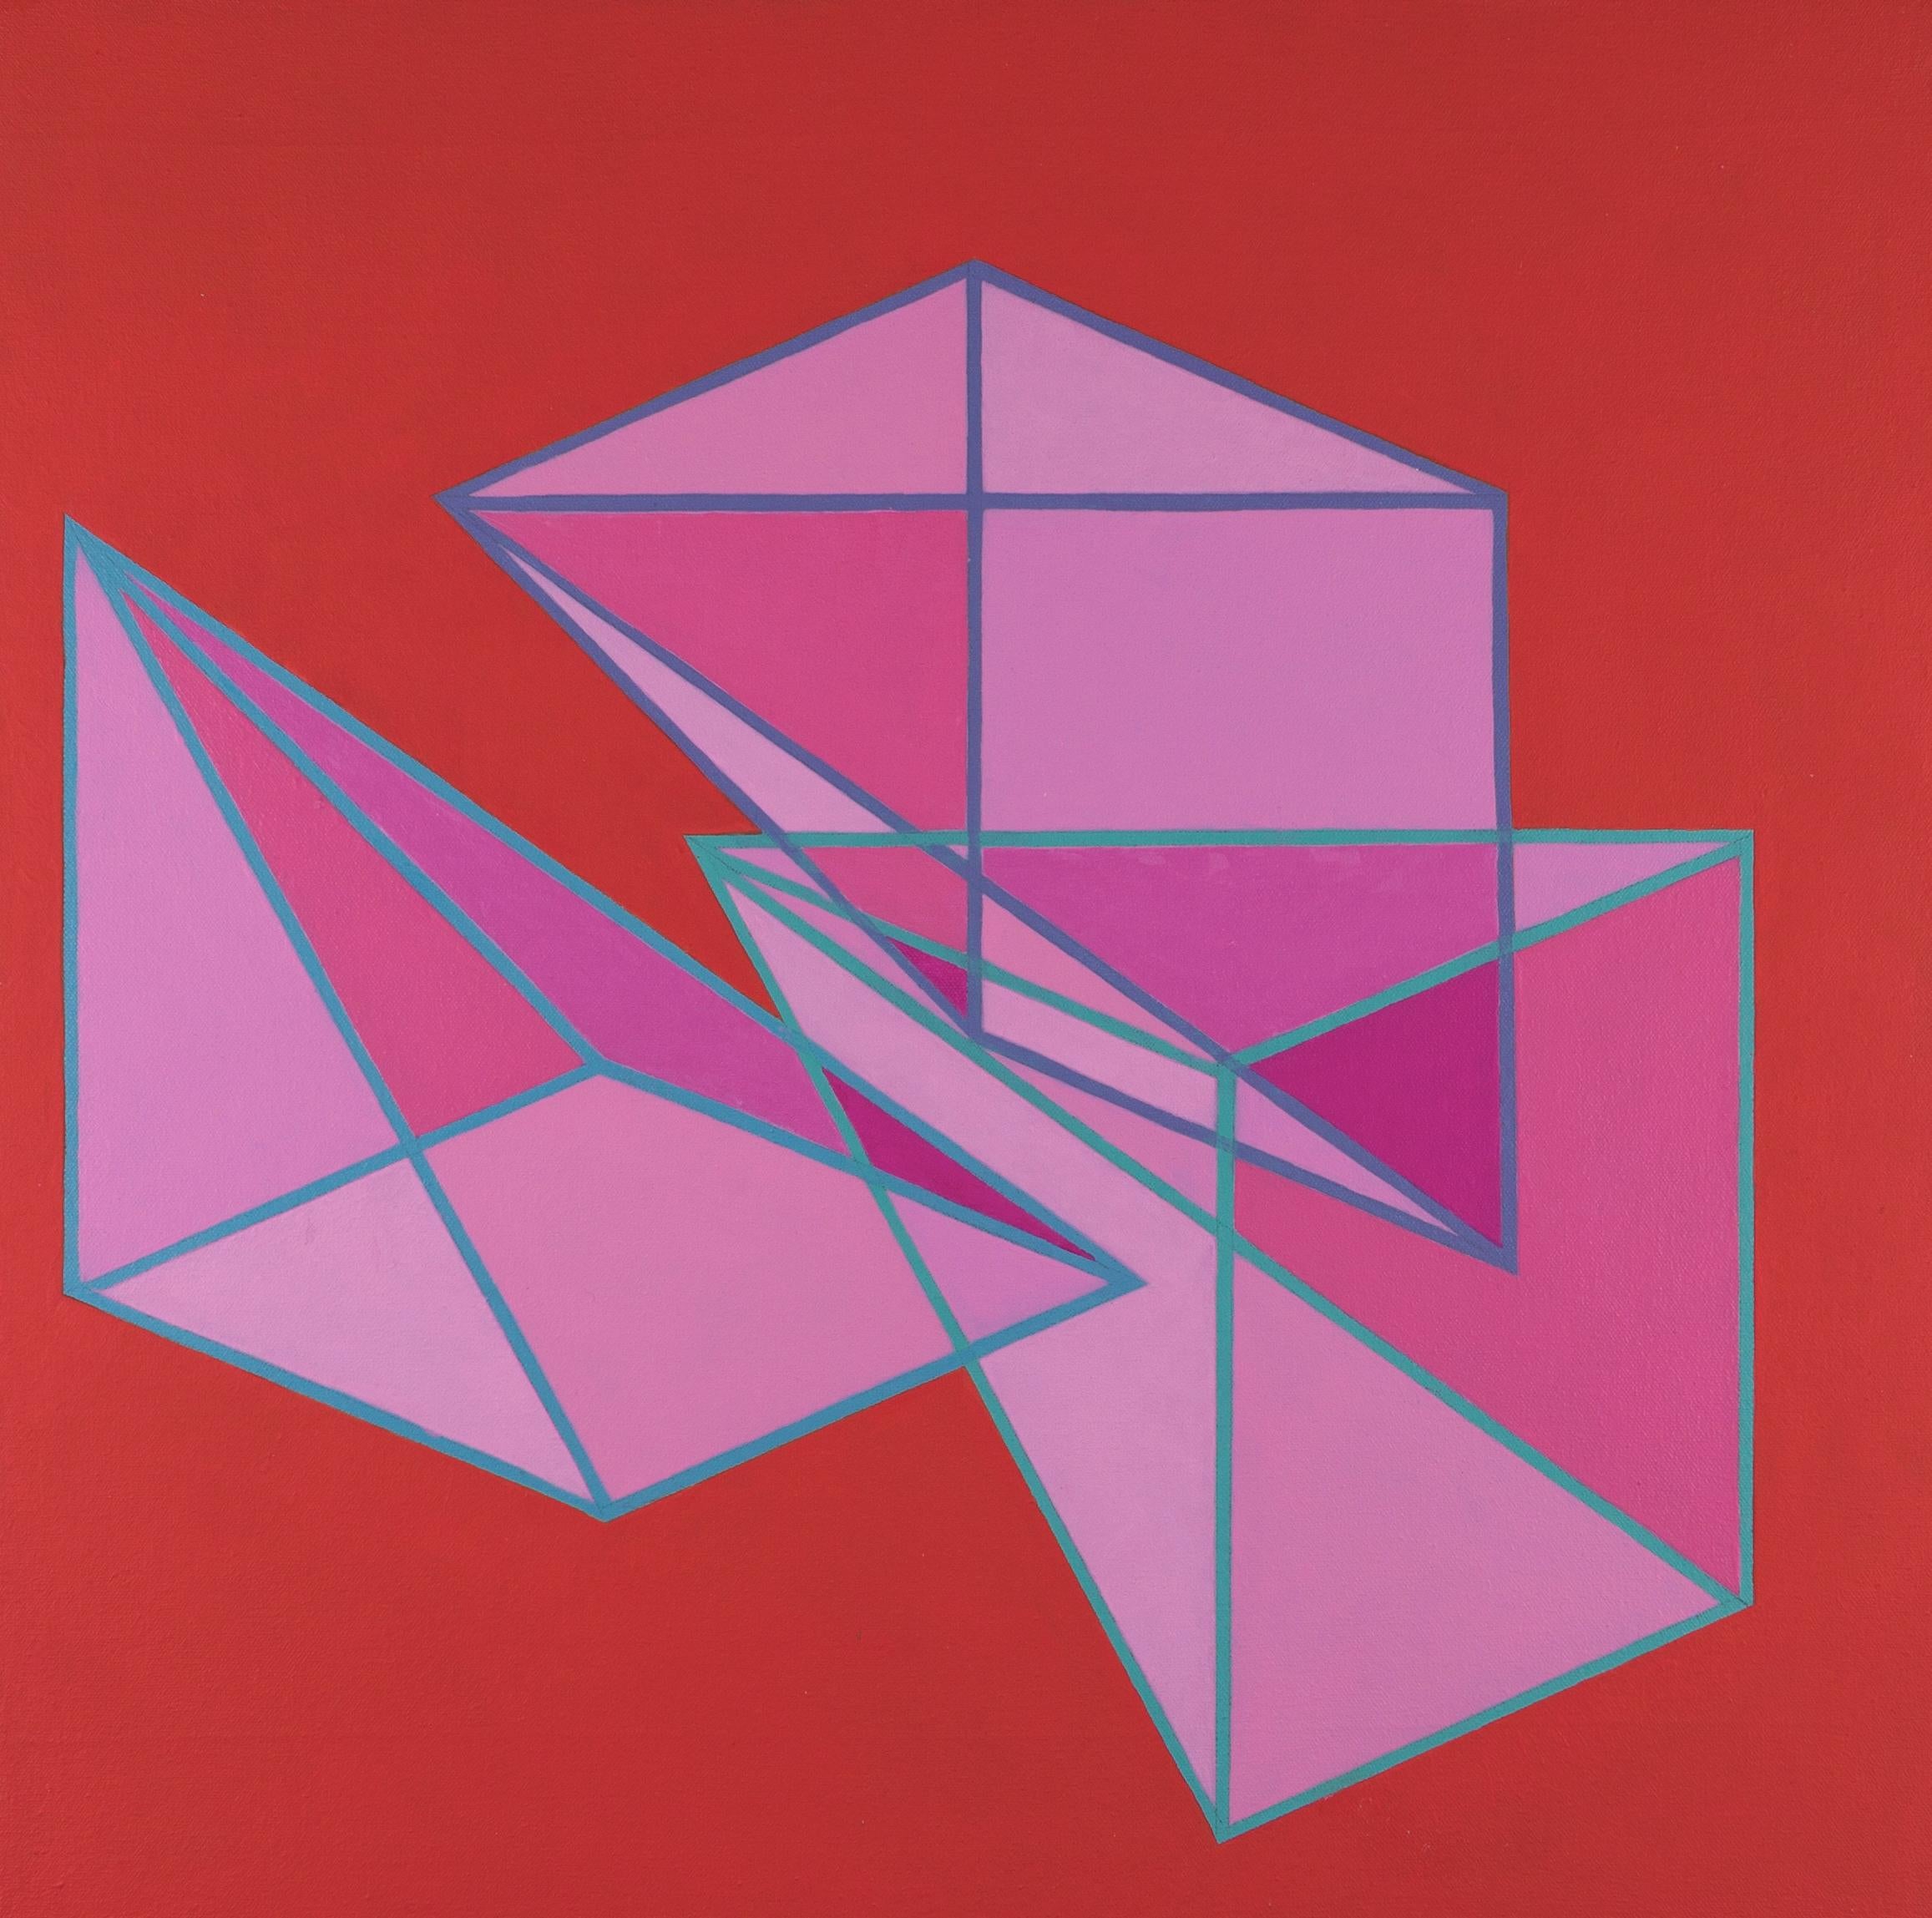 Benjamin Weaver Figurative Painting - Geometric abstract Op Art Pop Art painting in orange & red w/ triangles & cubes